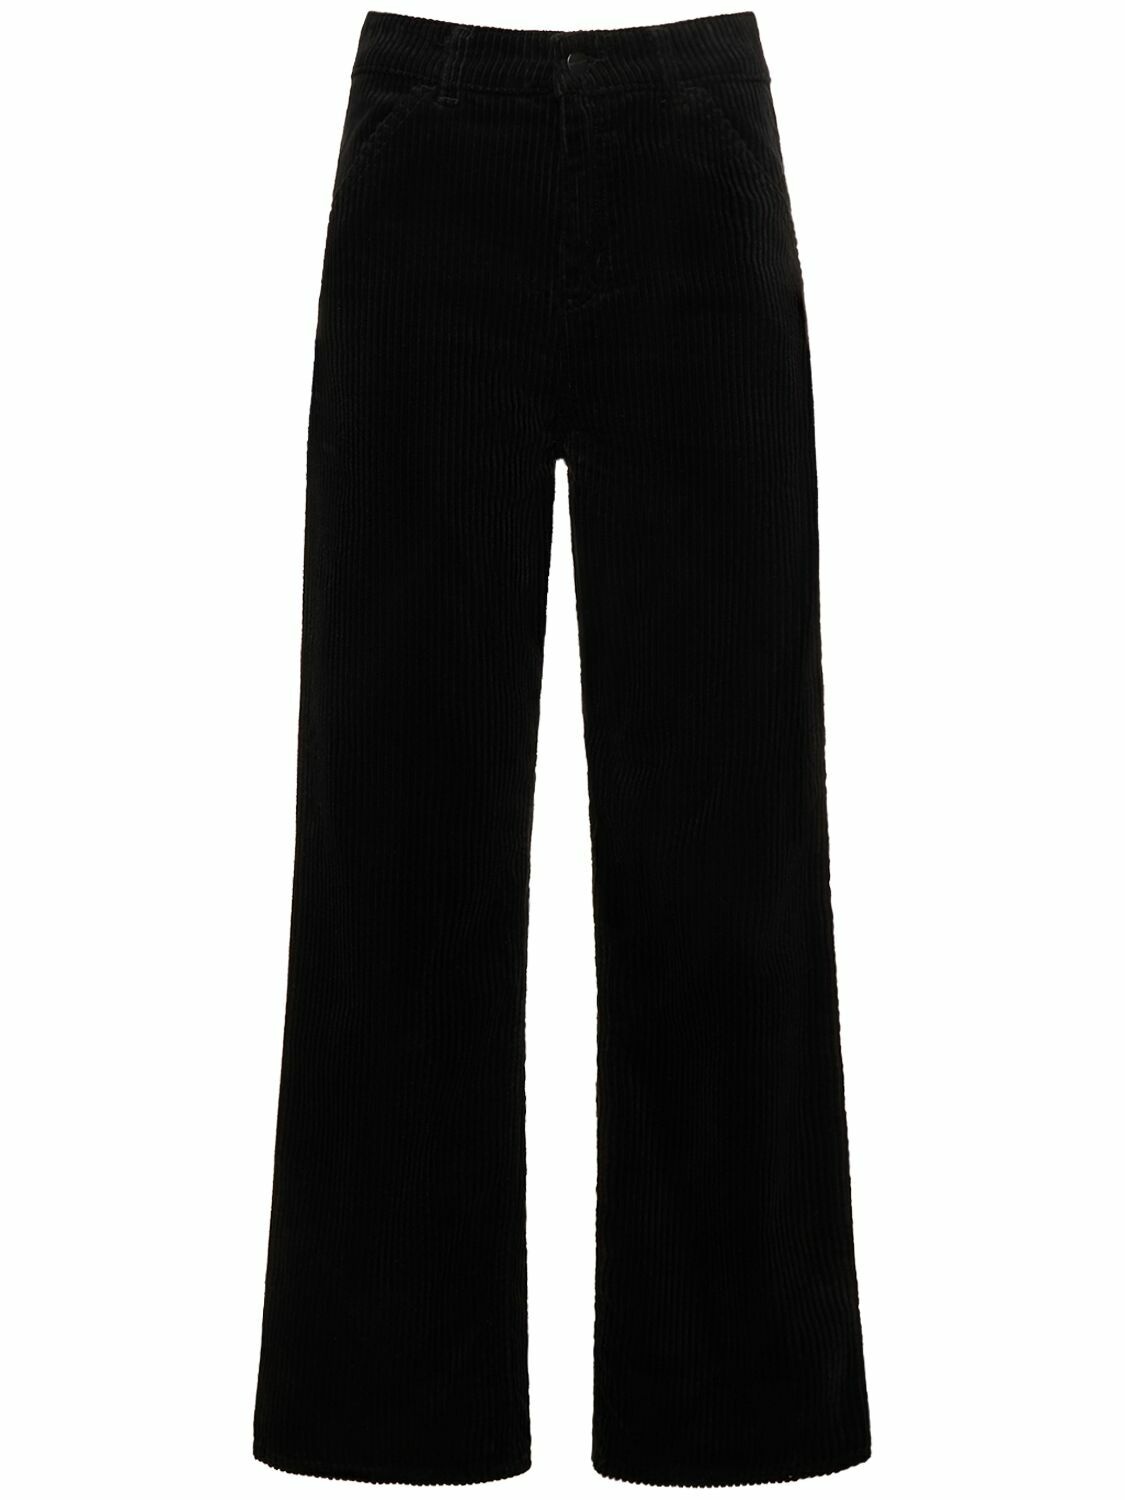 Carhartt WIP PIERCE PANT - Cargo trousers - black chromo/black 